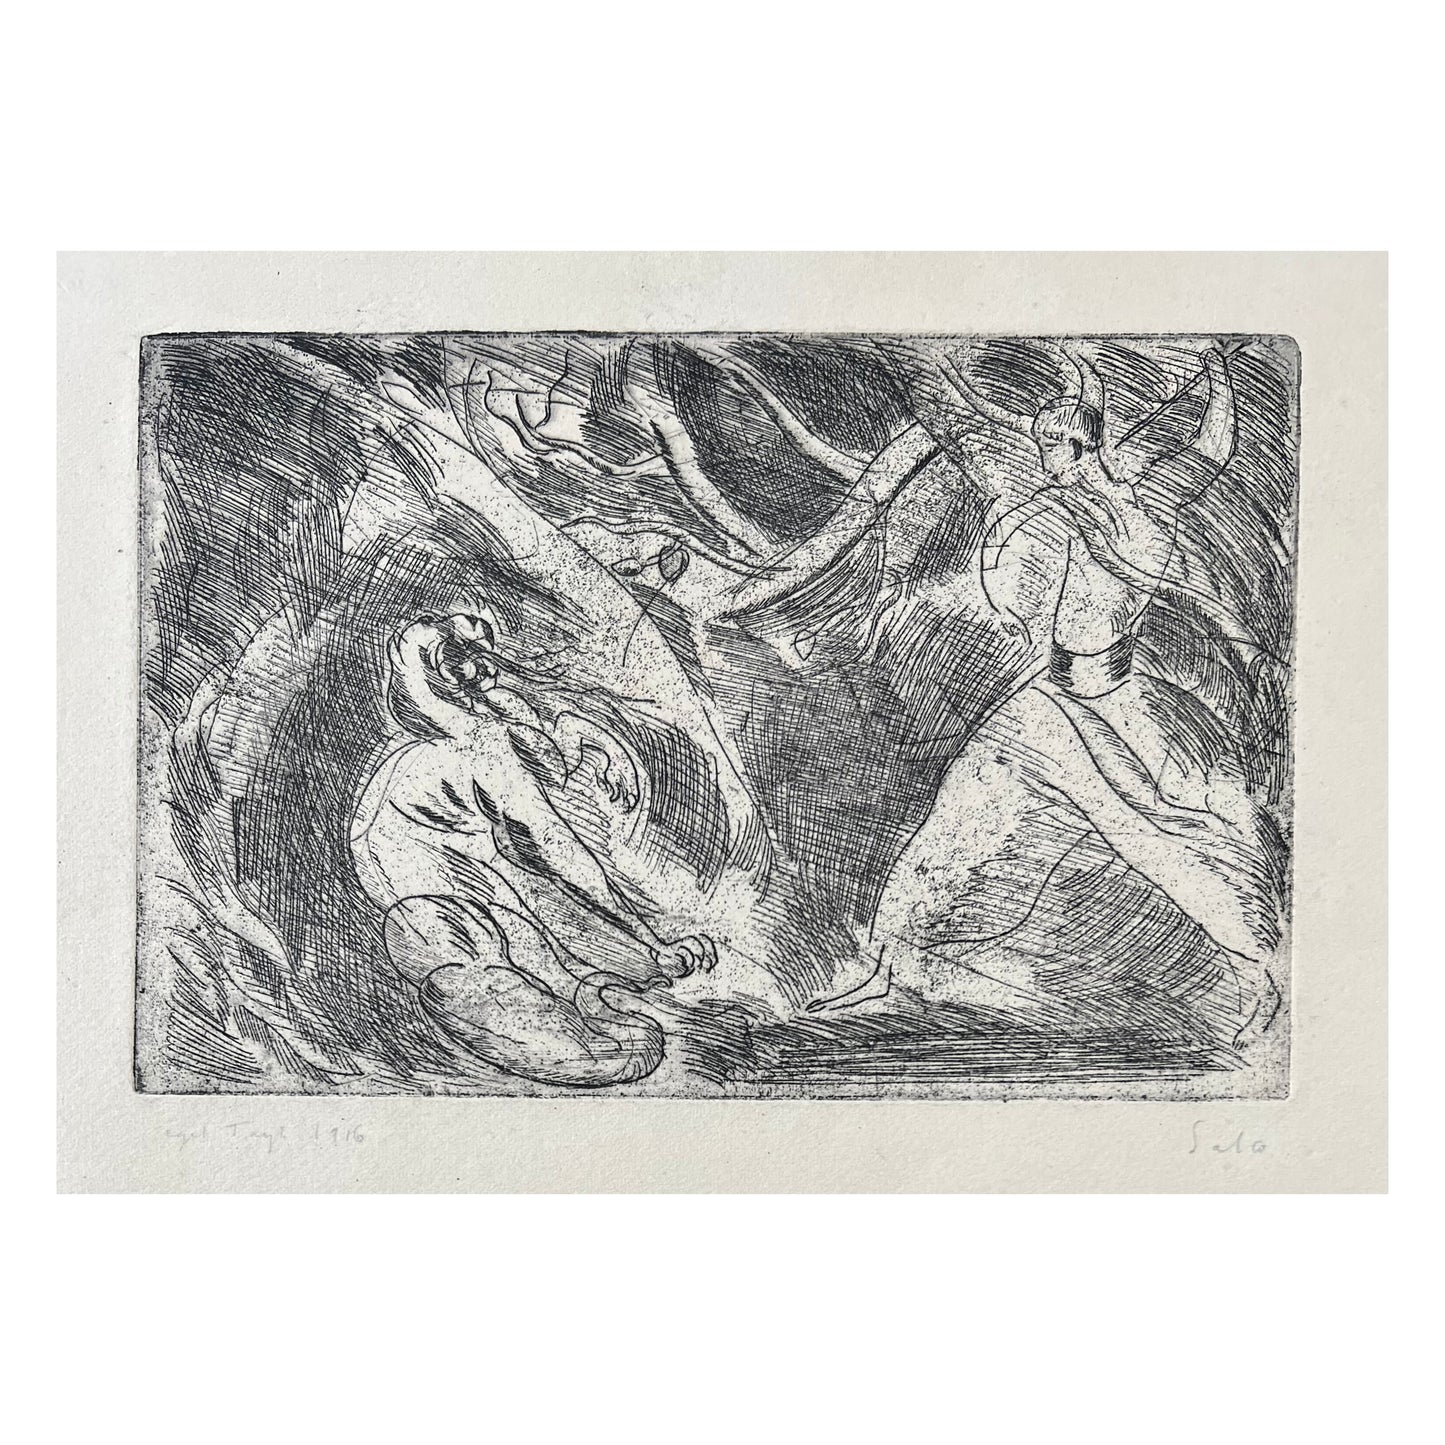 Axel Salto. "Dragon Fight", 1916